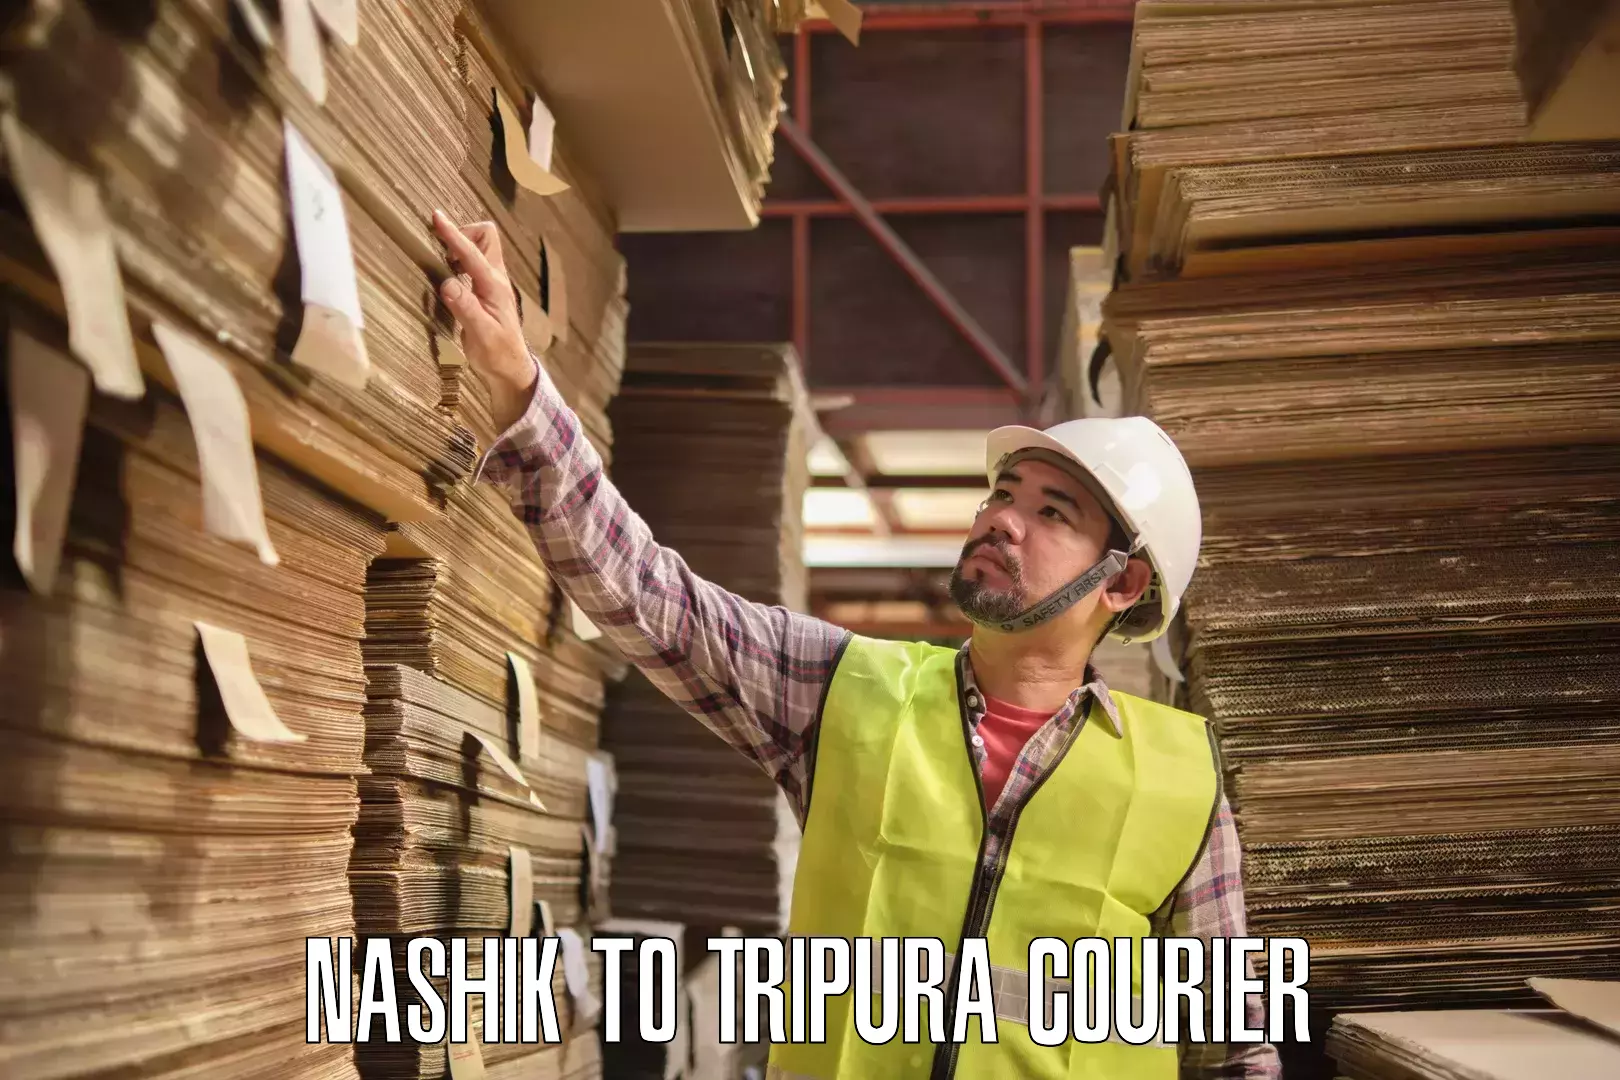 Courier service innovation Nashik to Aambasa